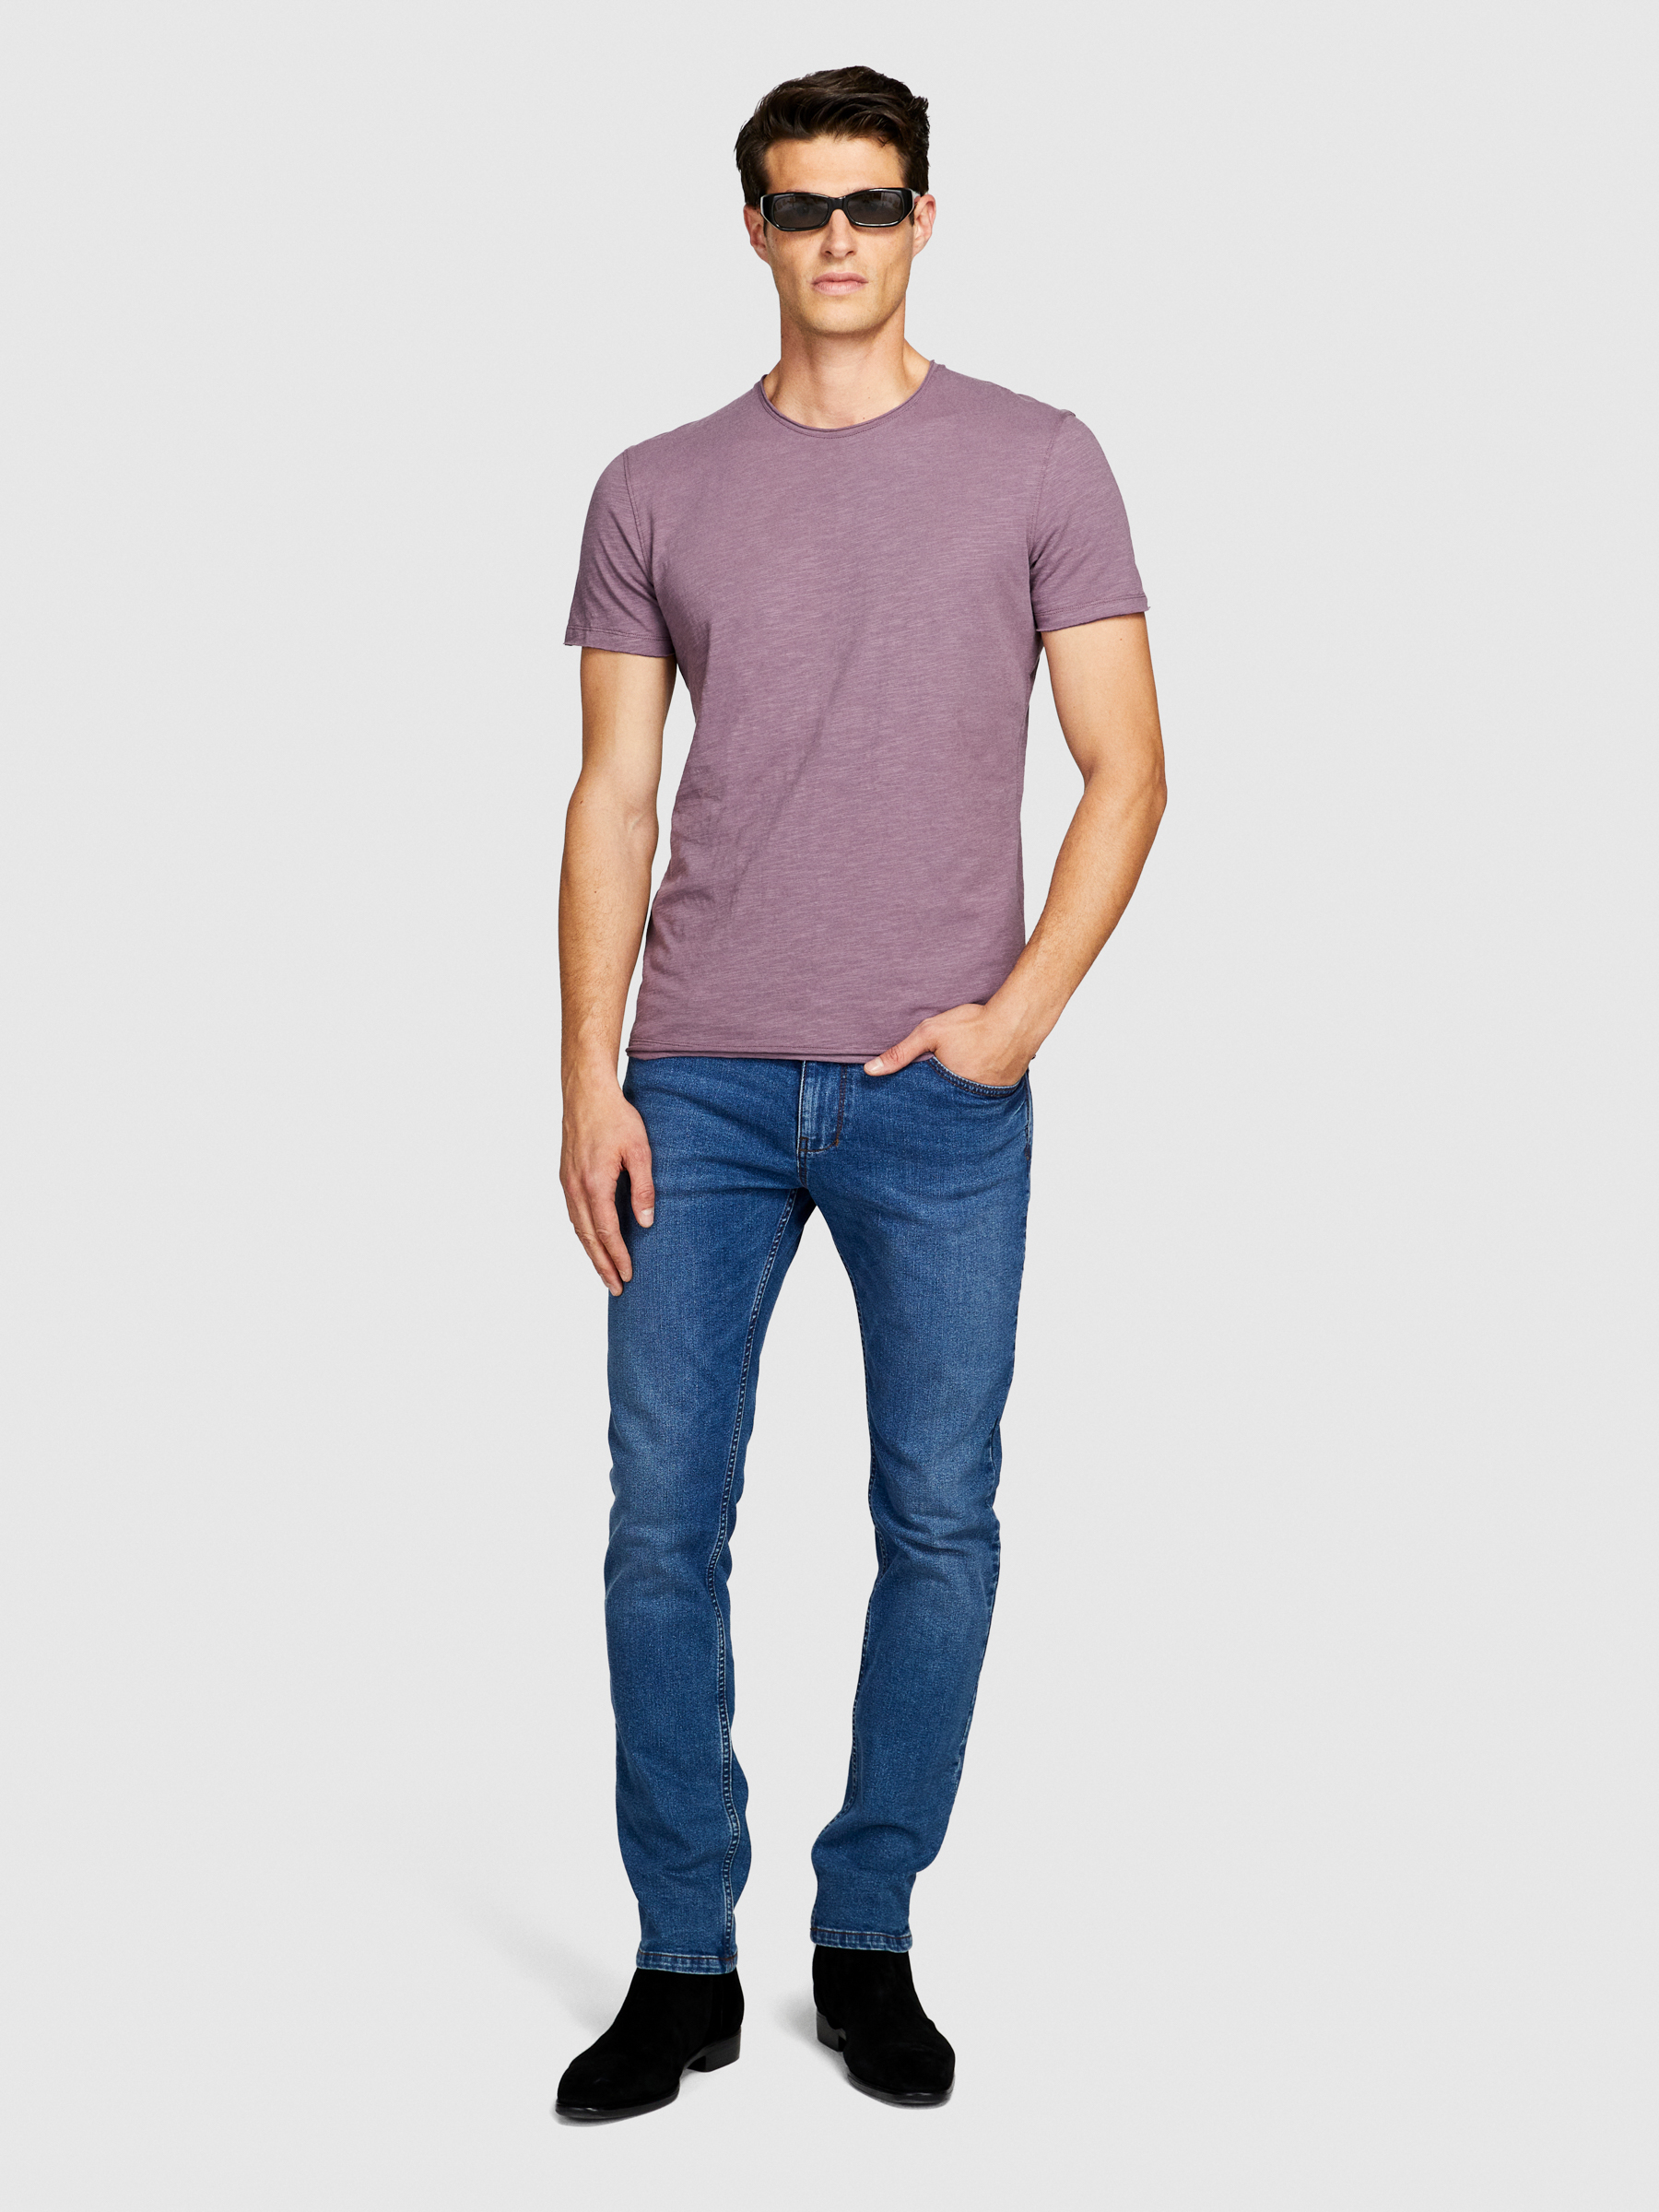 Sisley - Slim Fit T-shirt, Man, Mauve, Size: S